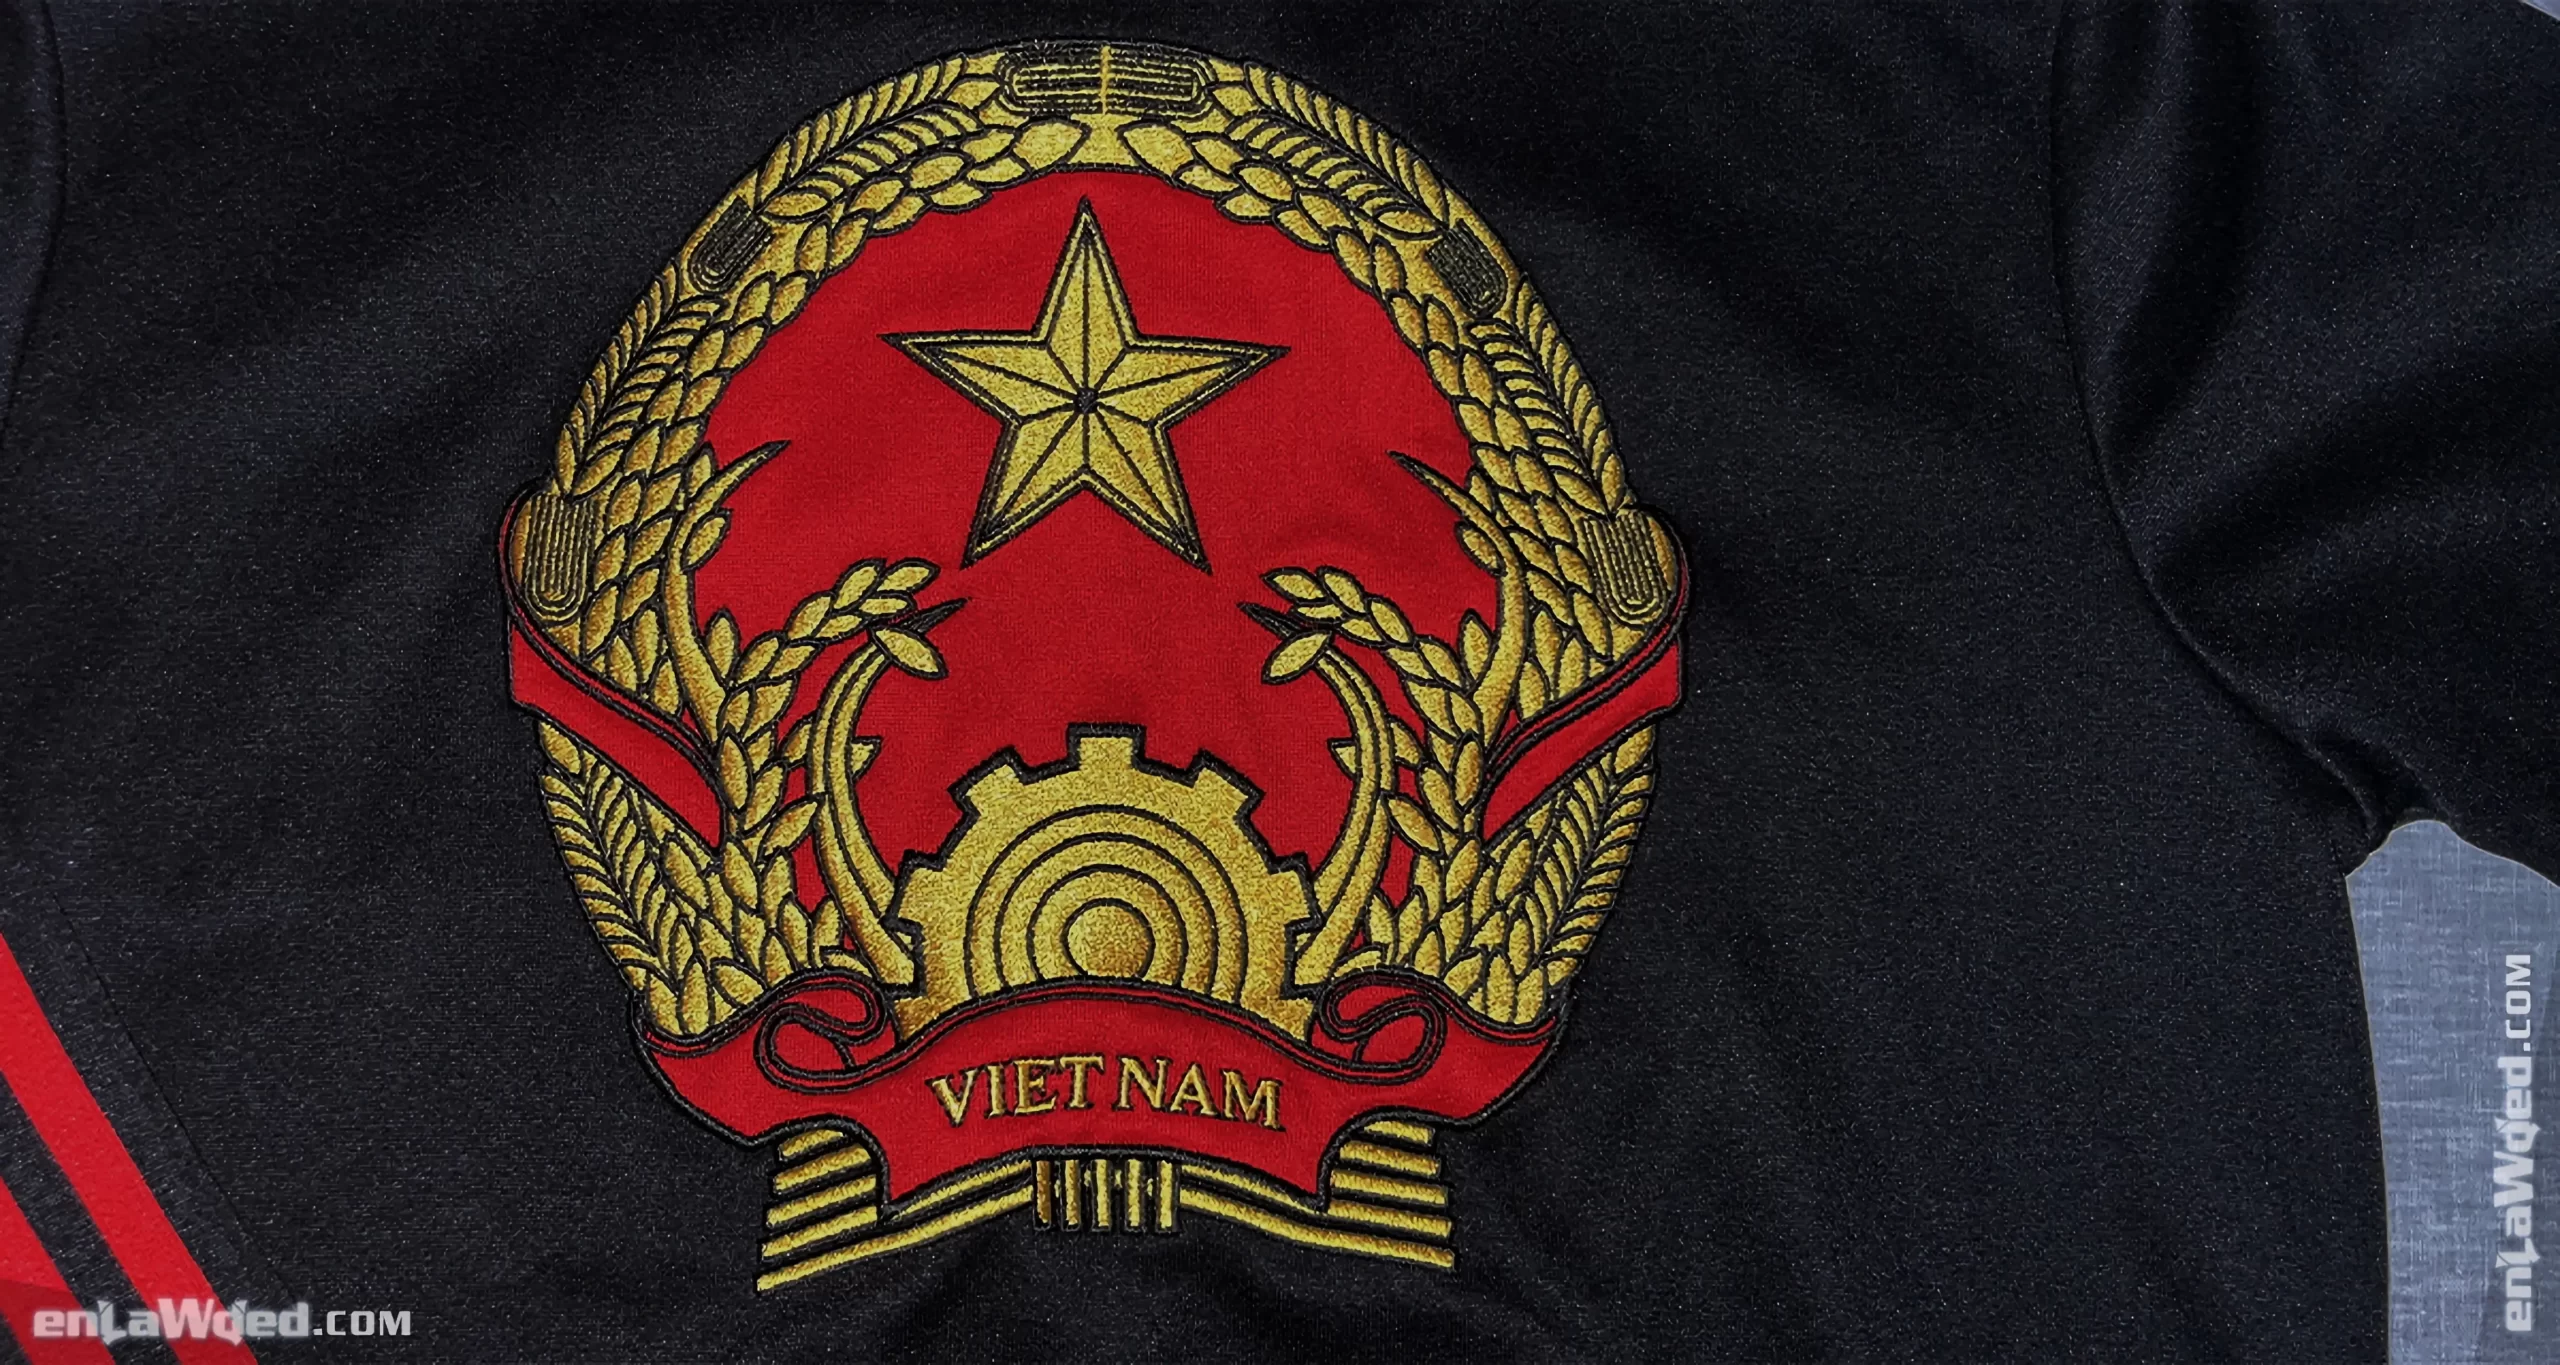 Men’s 2008 Vietnam TT by Adidas Originals: Freedom (EnLawded.com file #lp1mqwpl1262324x6u1x1i4an)